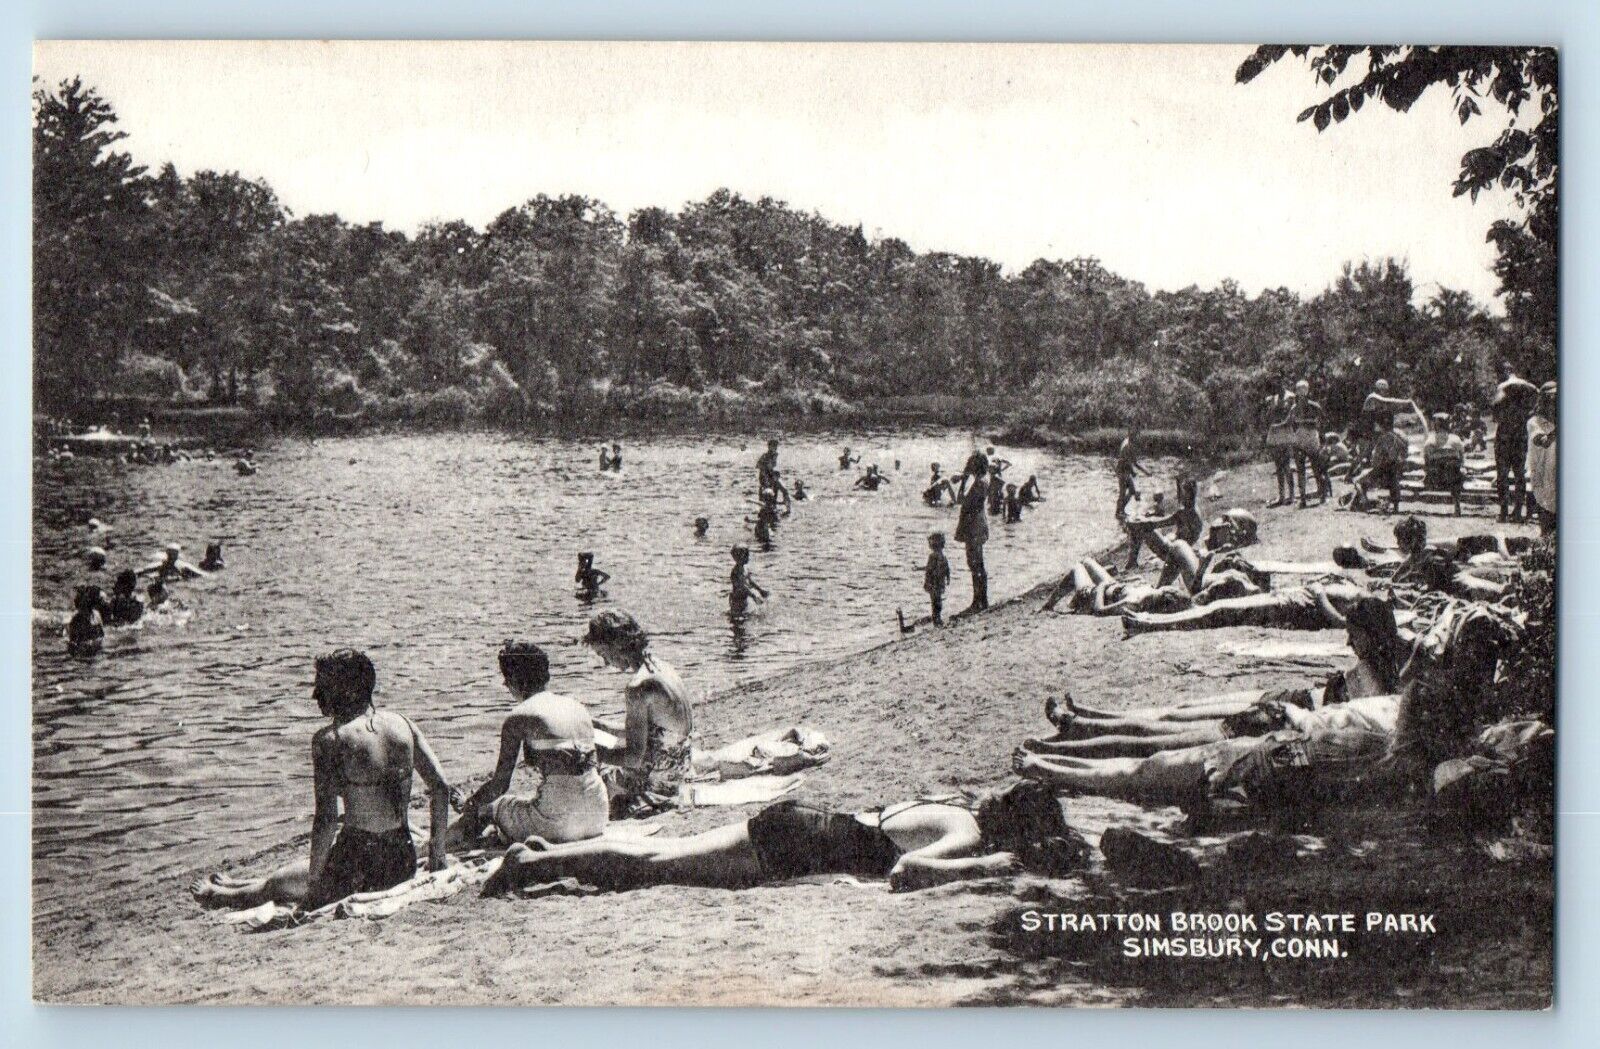 c1940 Stratton Brook State Park Simsbury Connecticut CT Vintage Antique Postcard